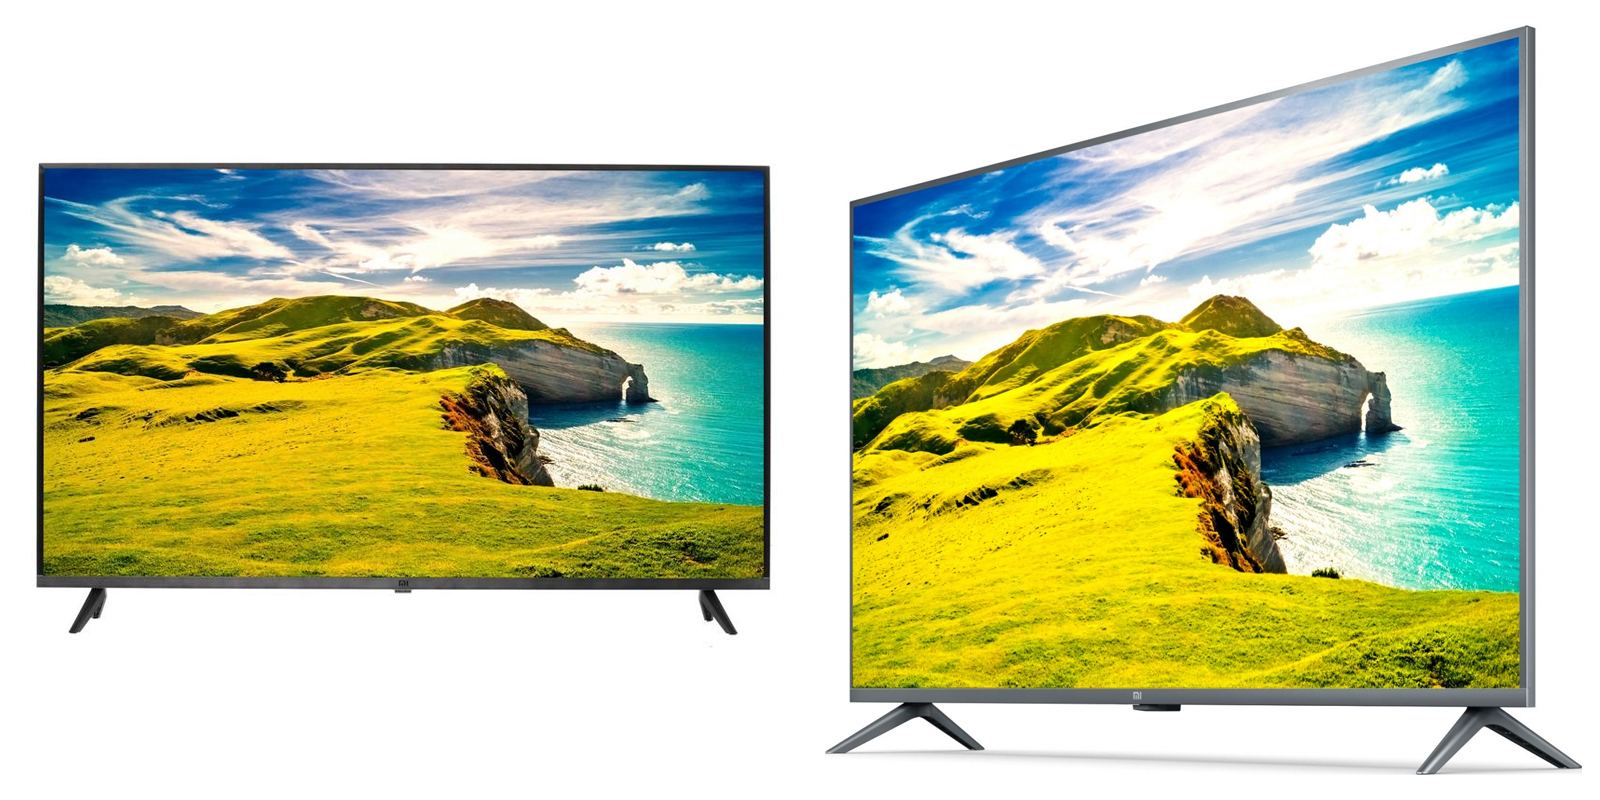 Озон телевизоры lg. Mi TV 4s 55 vs Samsung 7100. Озон телевизоры. На Озон телевизоры 43 дюйма. Телевизор на Озон 43 дюйма в черную пятницу.